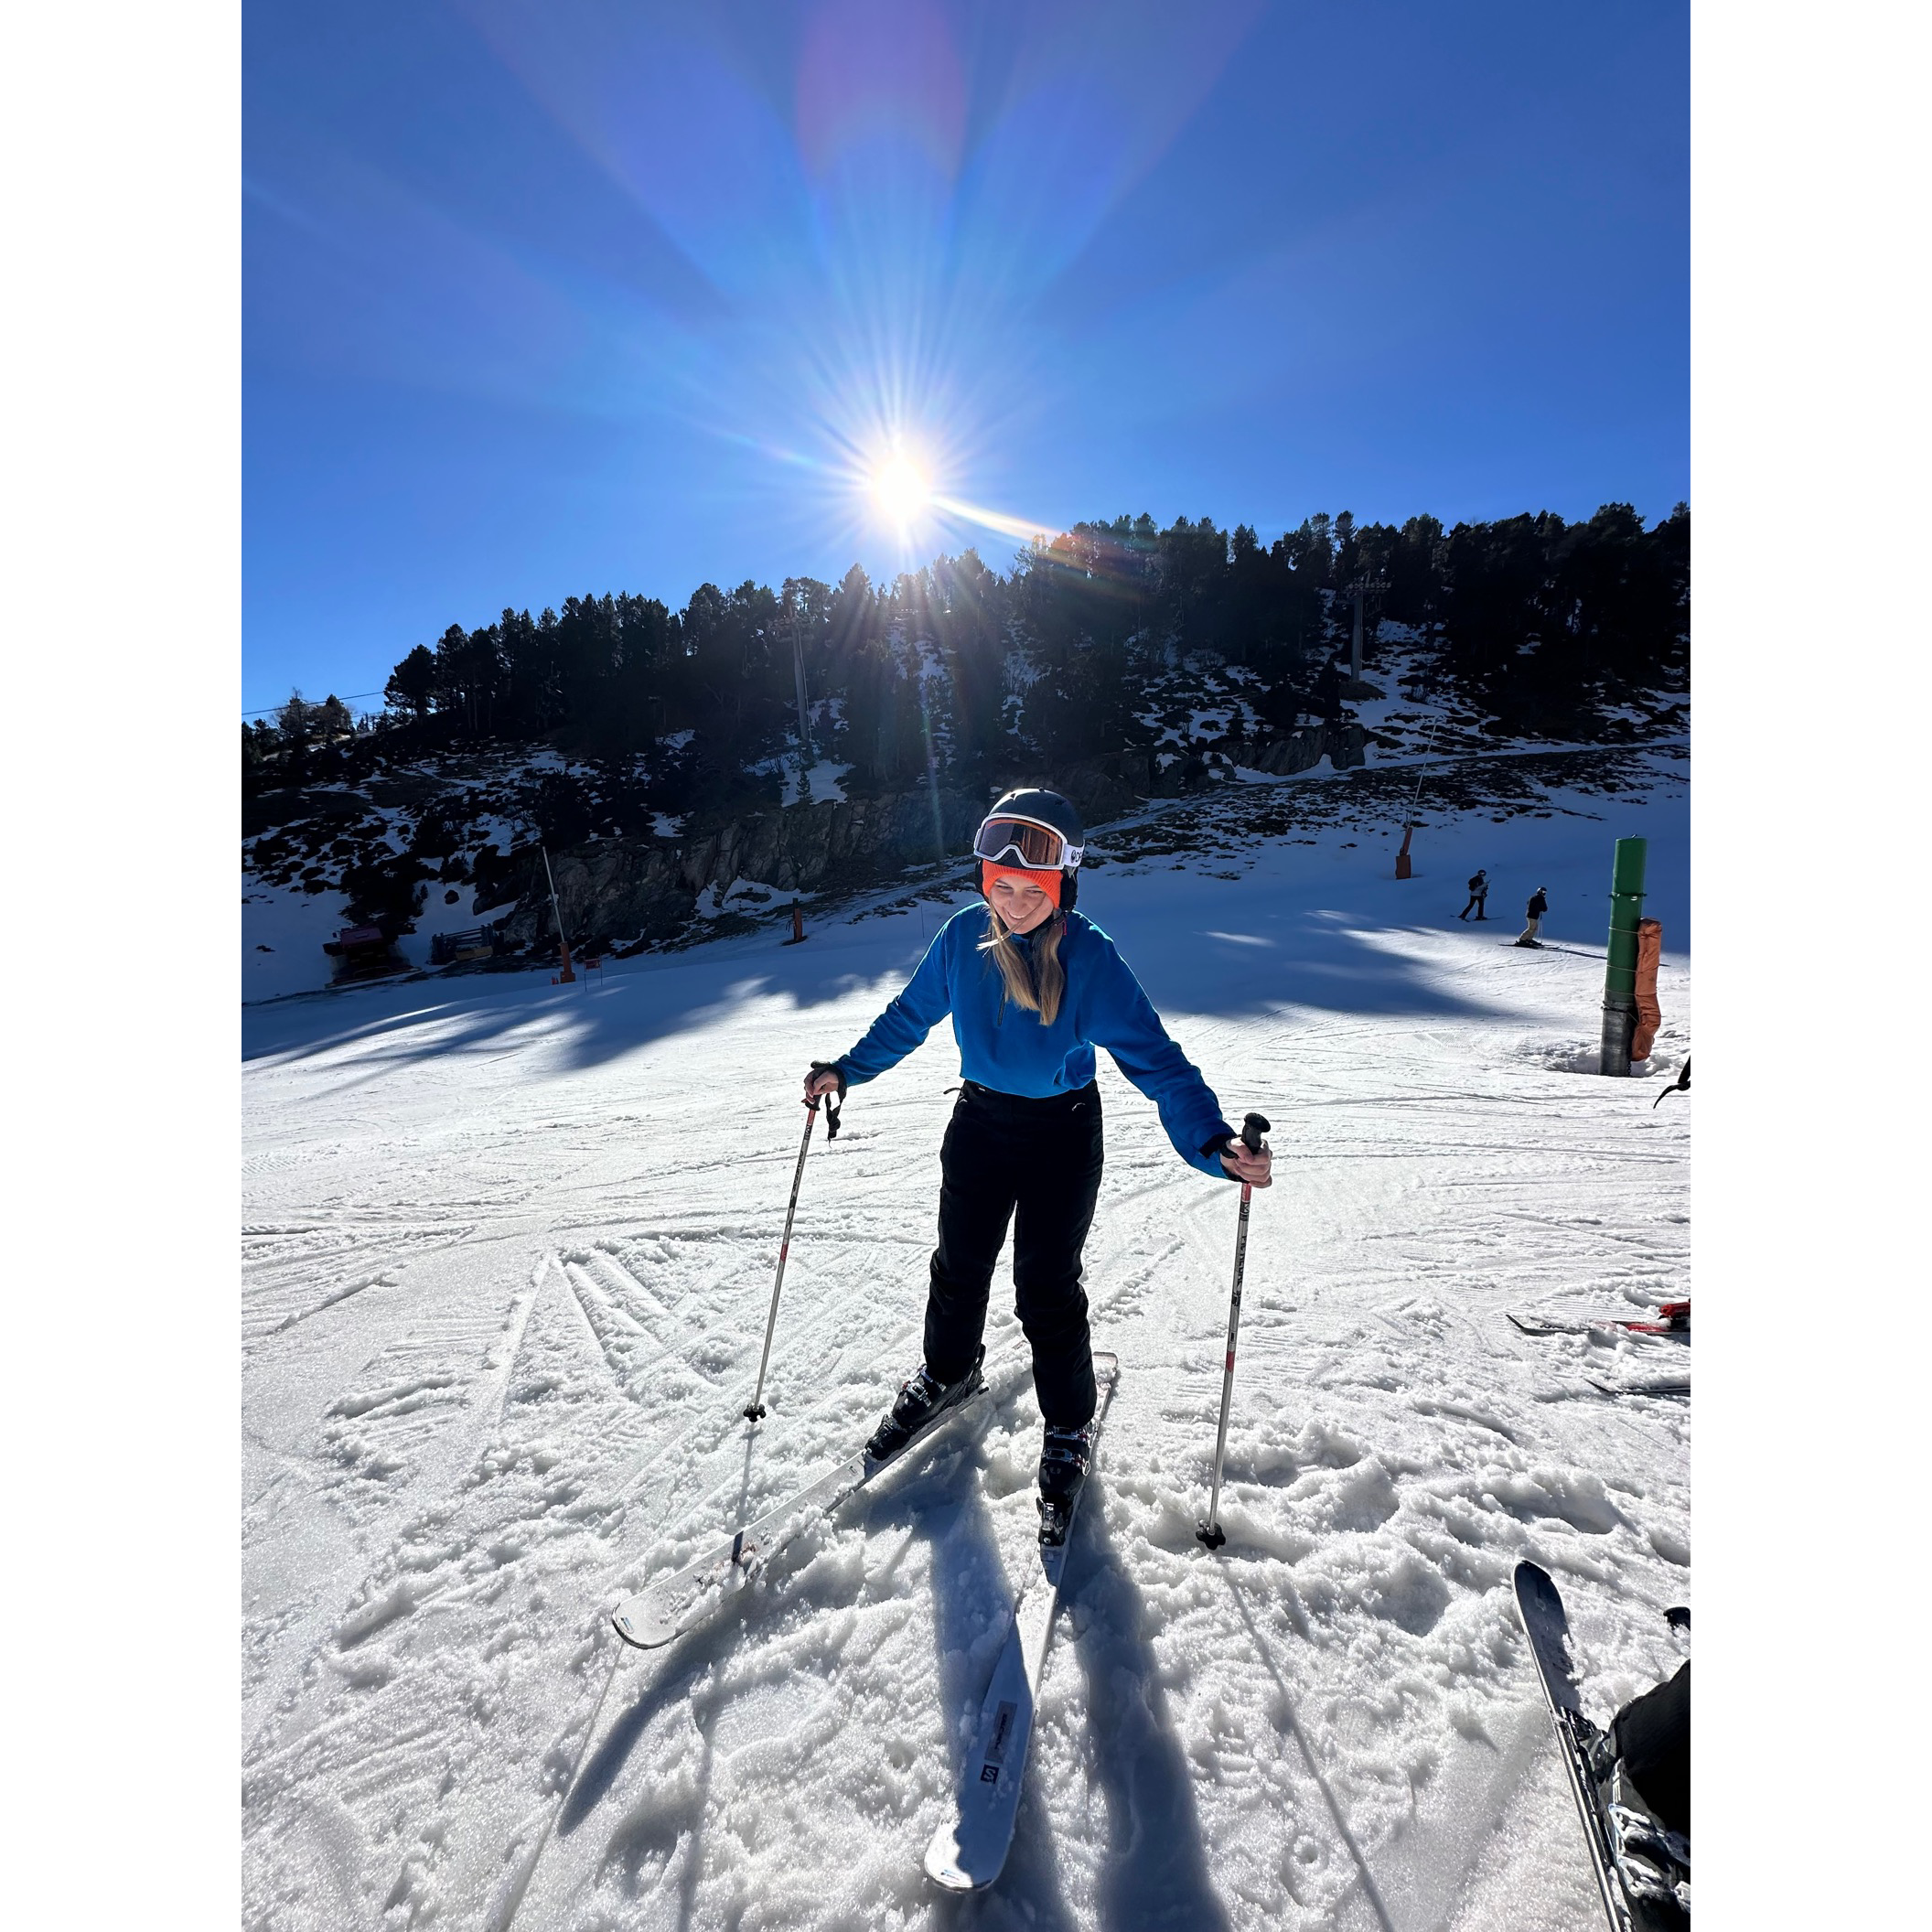 Standing still on skis – sometimes the hardest part